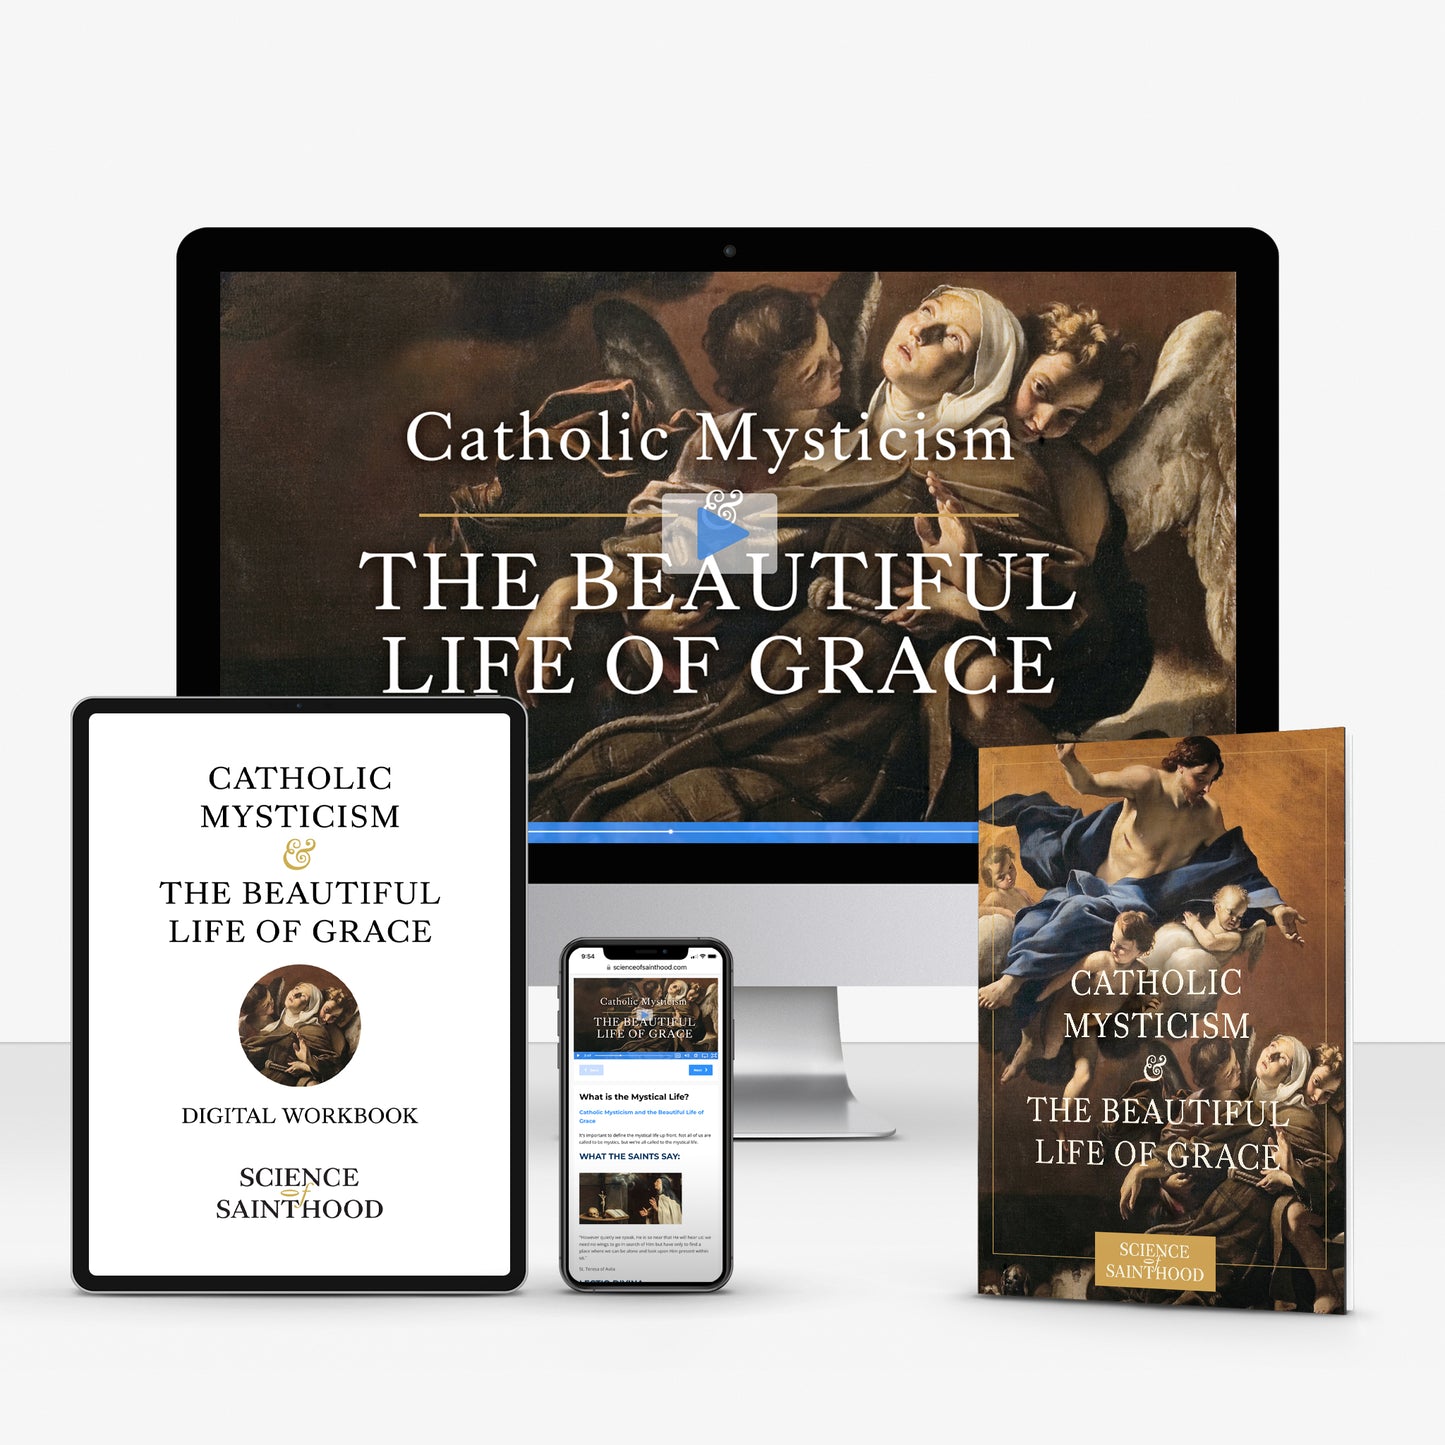 Personal Study Kit with Print & Digital Workbook: Catholic Mysticism & The Beautiful Life of Grace